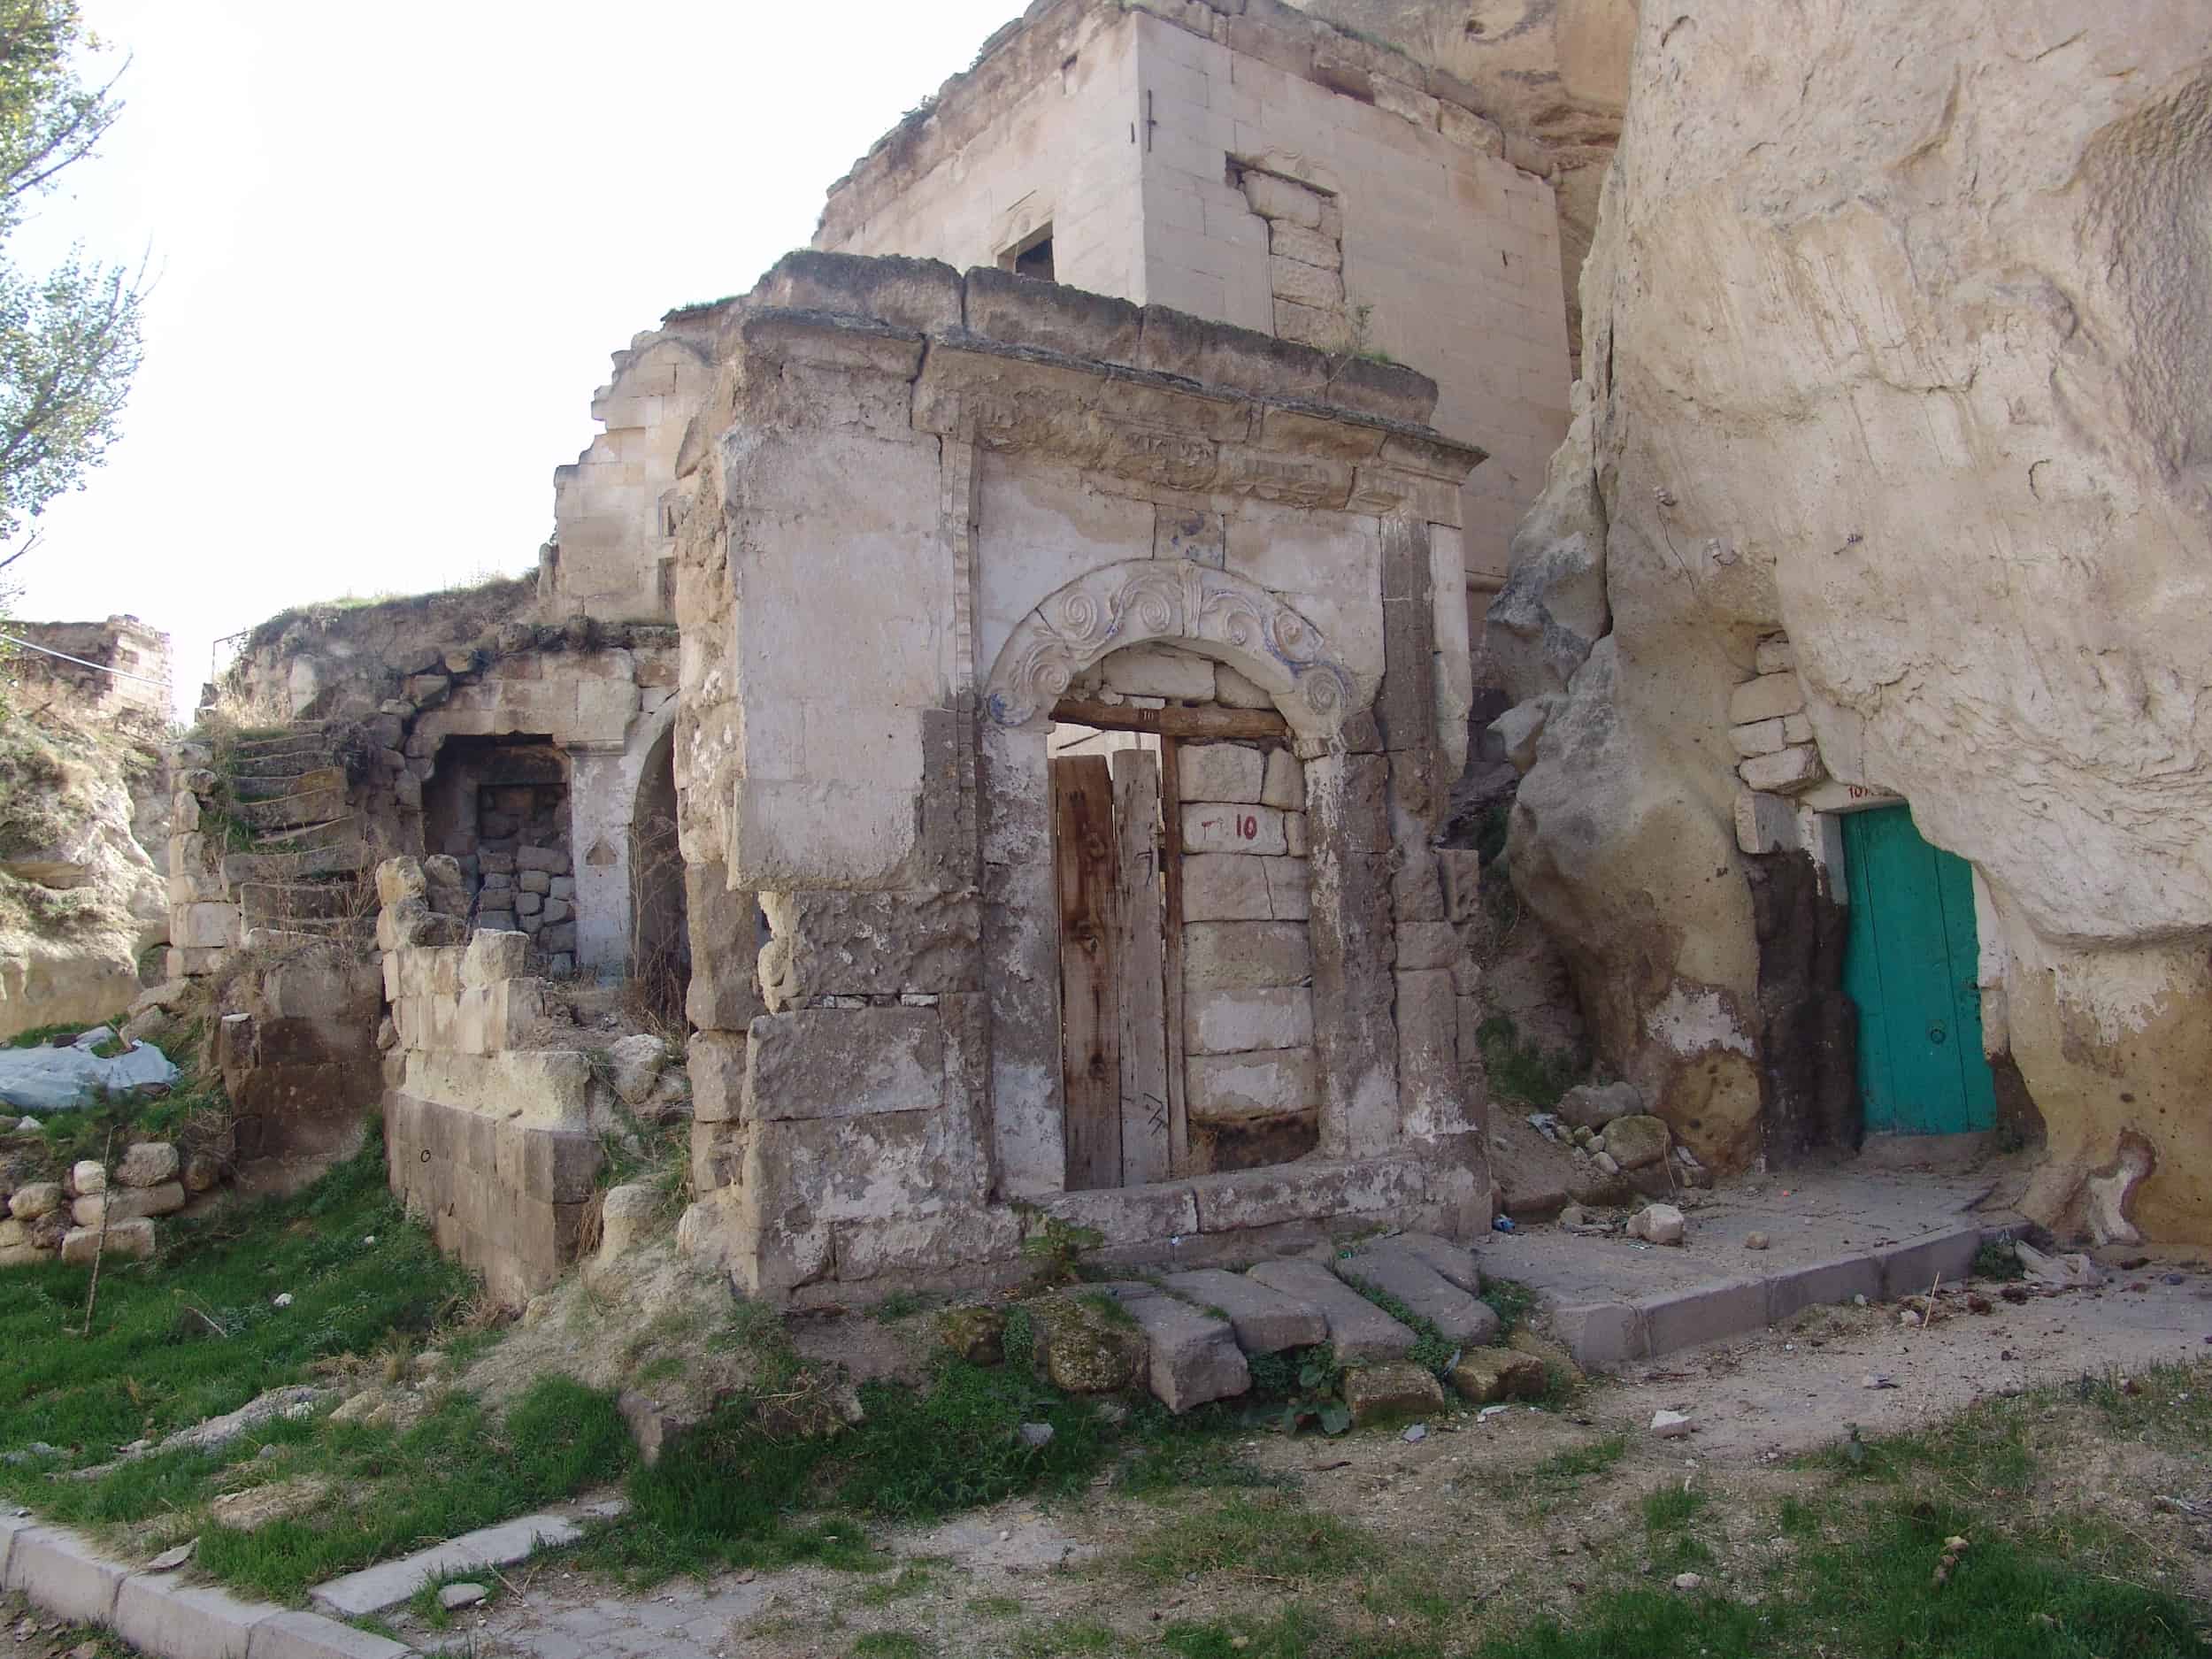 Ruined Greek home in Mustafapaşa (Sinasos), Cappadocia, Turkey